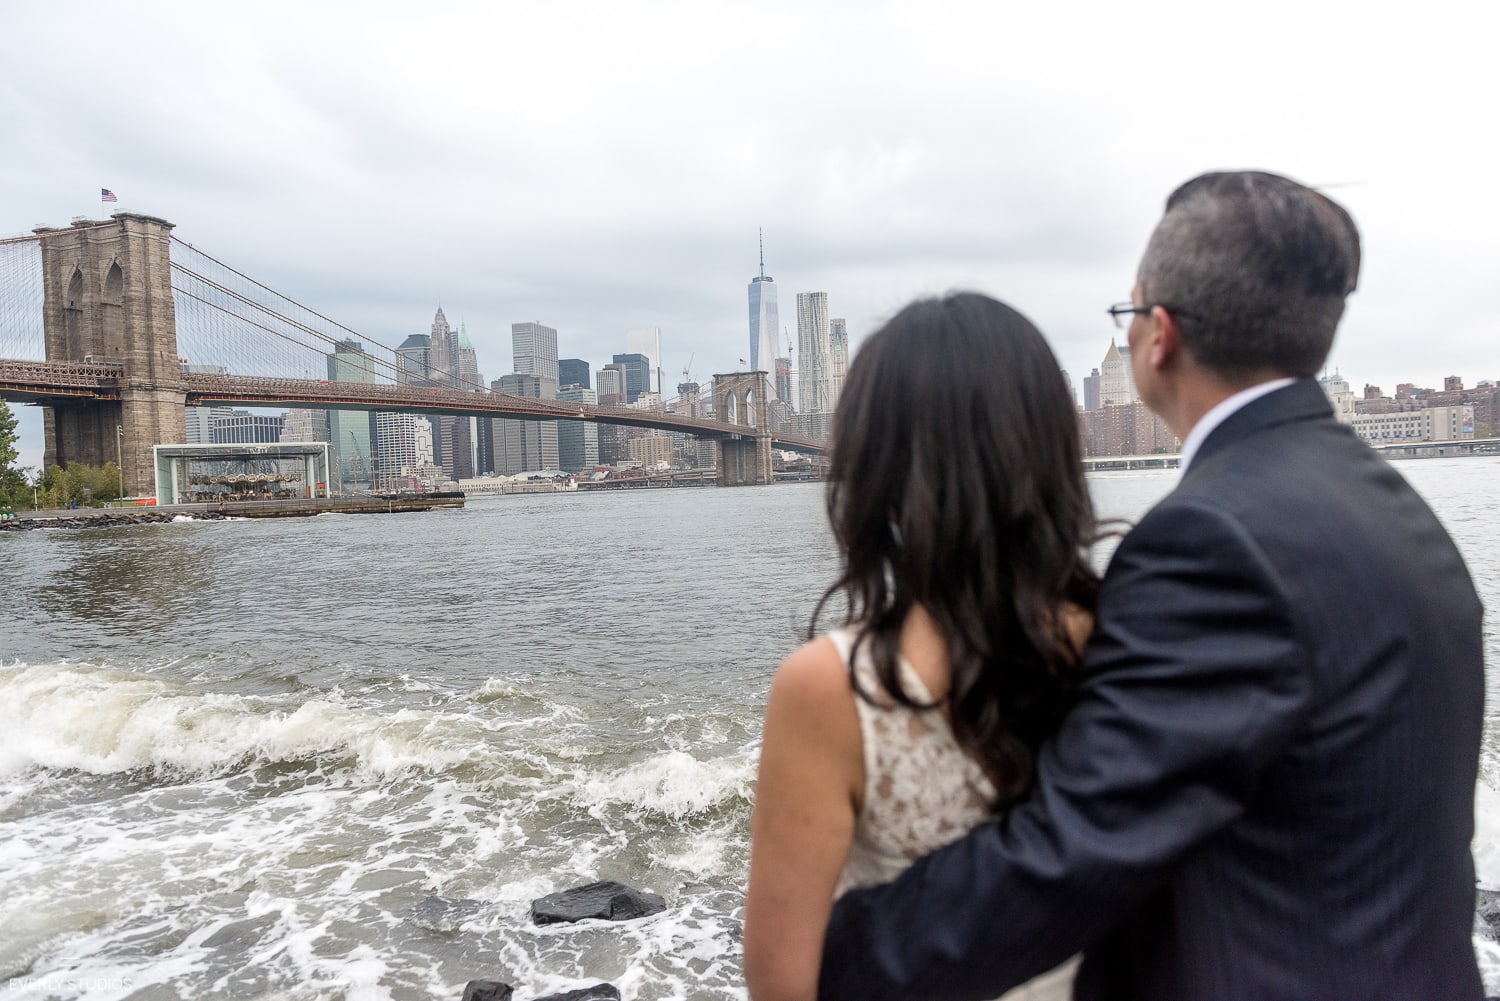 Brooklyn Bridge engagement photos. Photos by New York wedding photographer Everly Studios, www.everlystudios.com